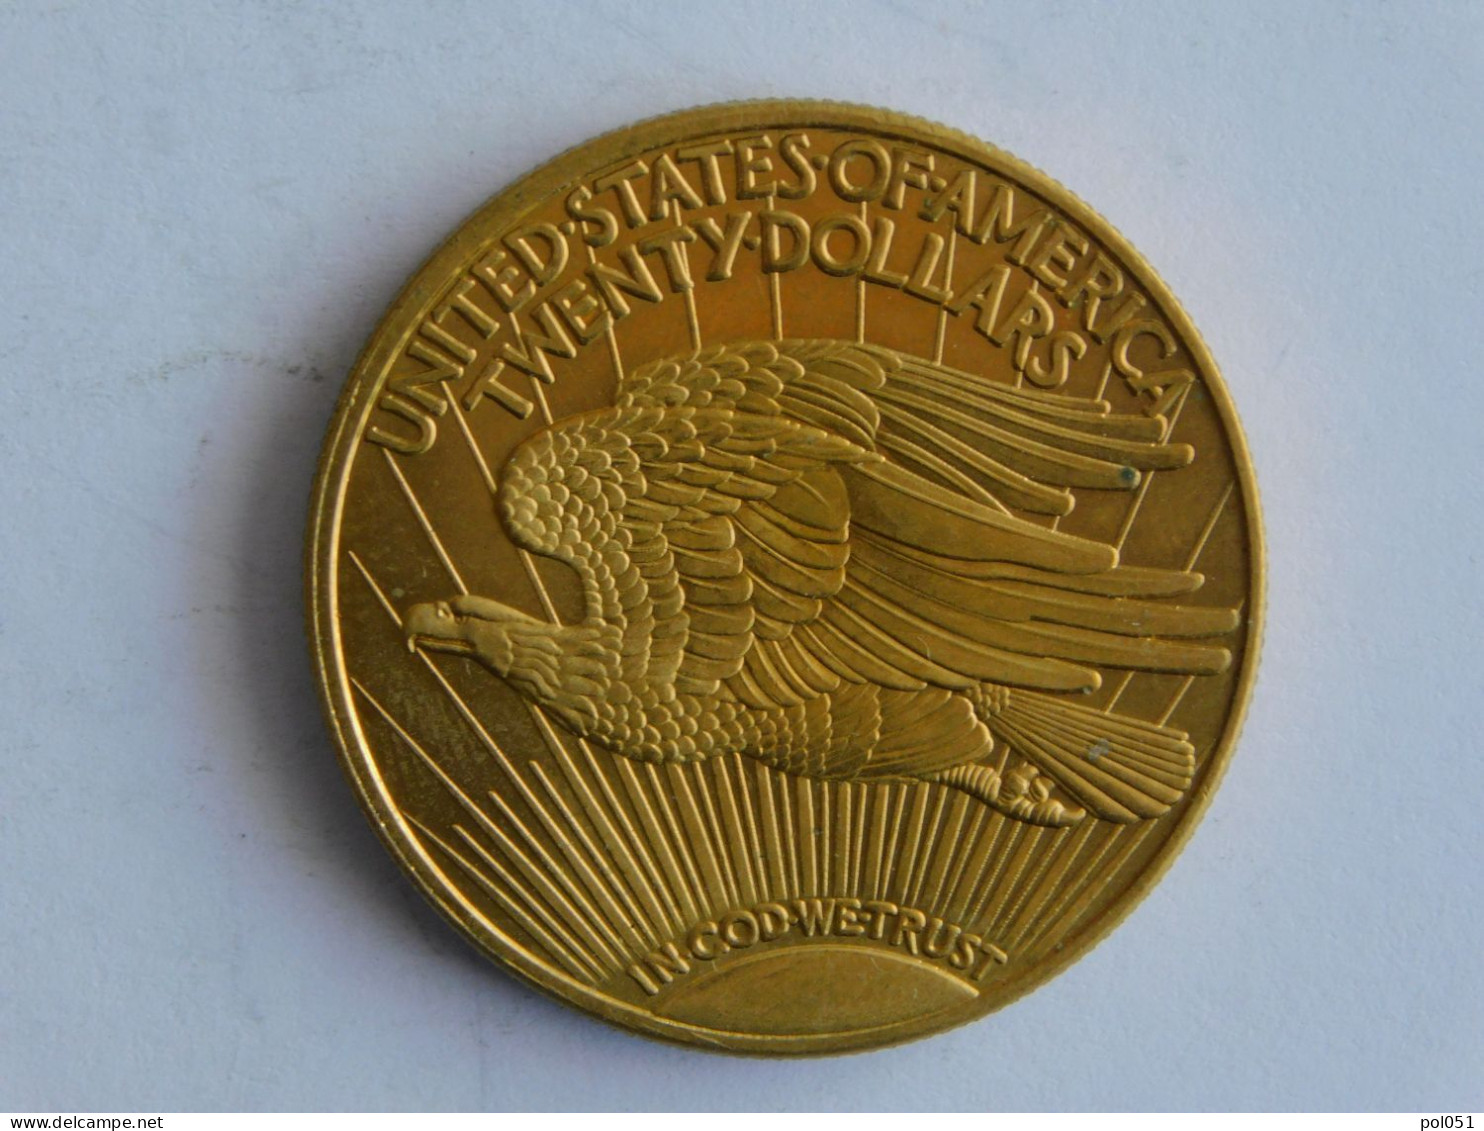 USA 20 TWENTY DOLLAR 1931 OR GOLD Dollars Copie Copy - 20$ - Double Eagles - 1907-1933: Saint-Gaudens